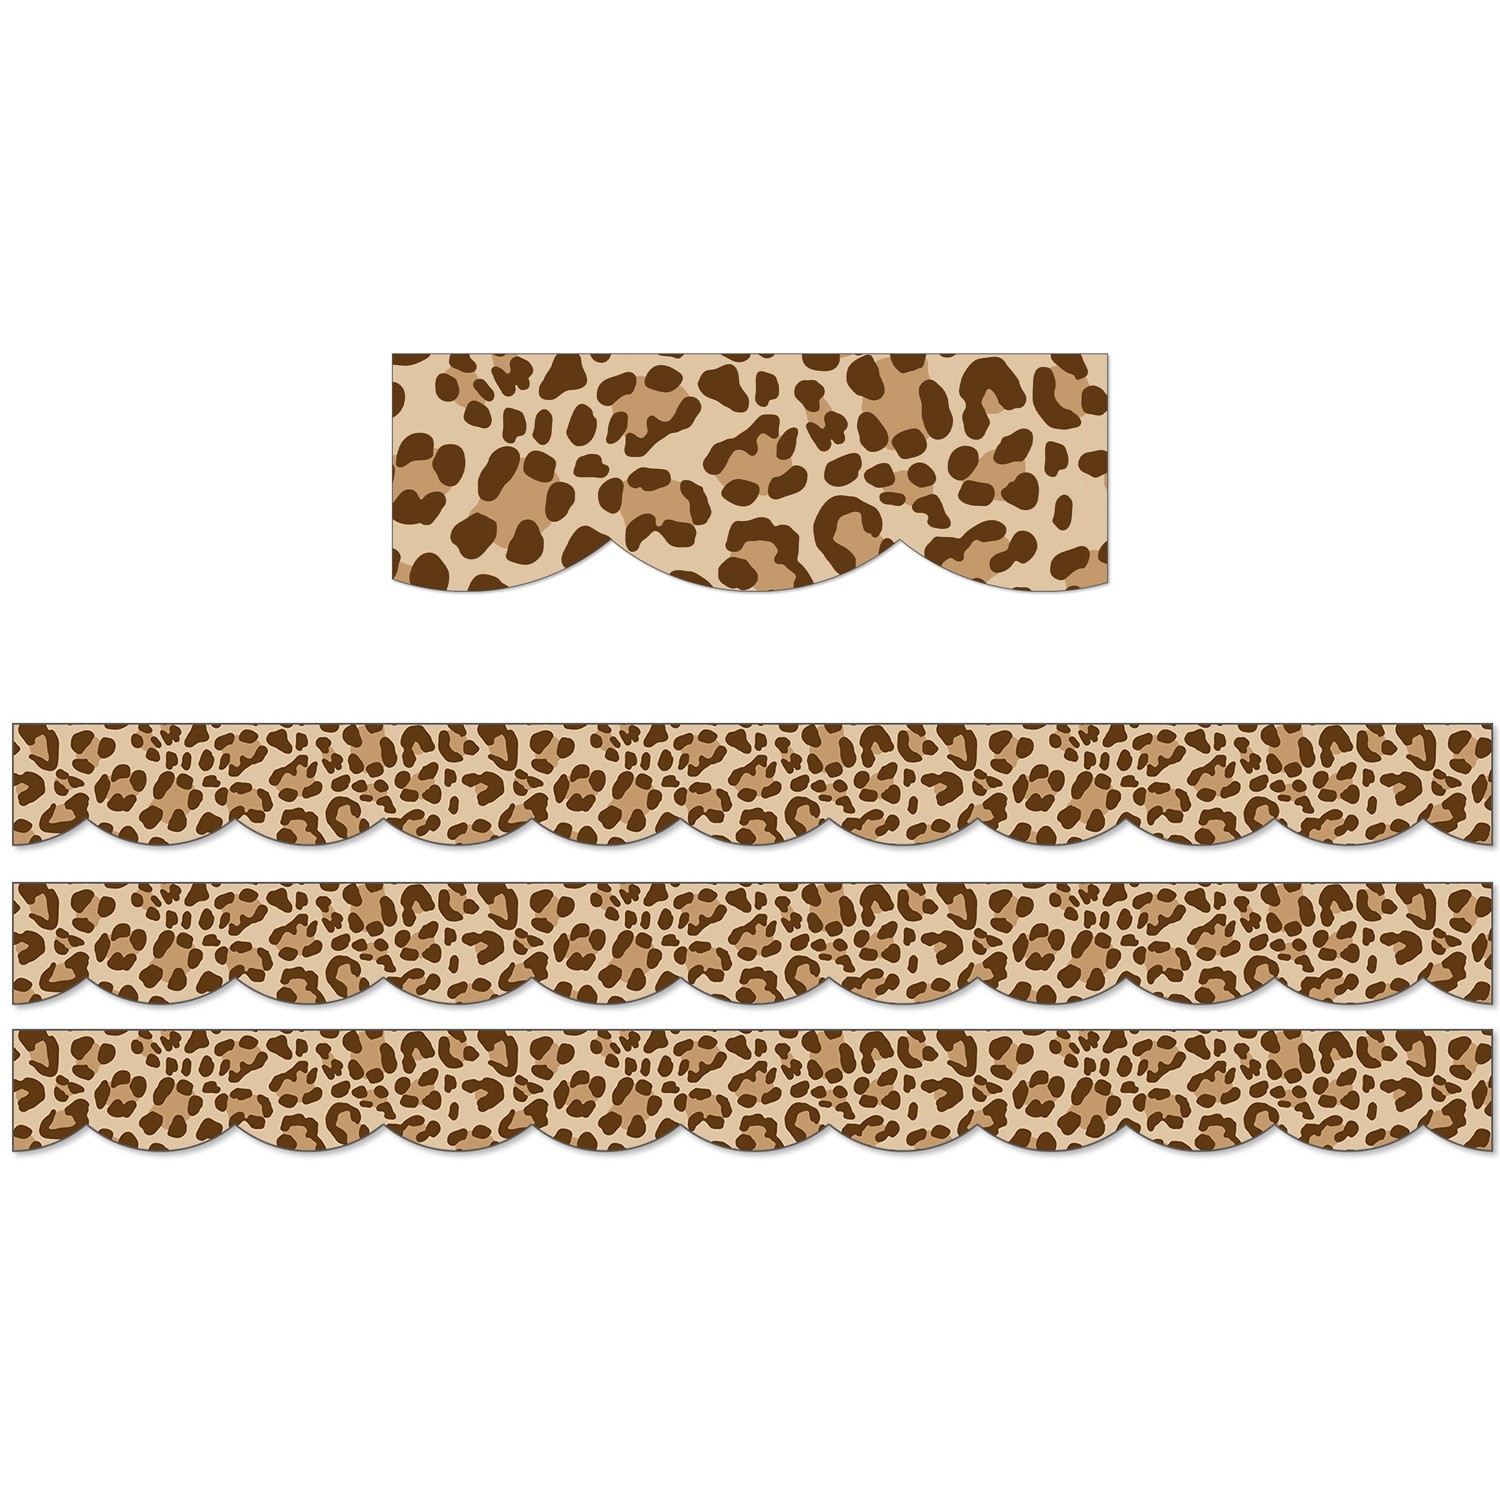 Simply Safari Leopard Scalloped Border, 39 Feet Per Pack, 3 Packs